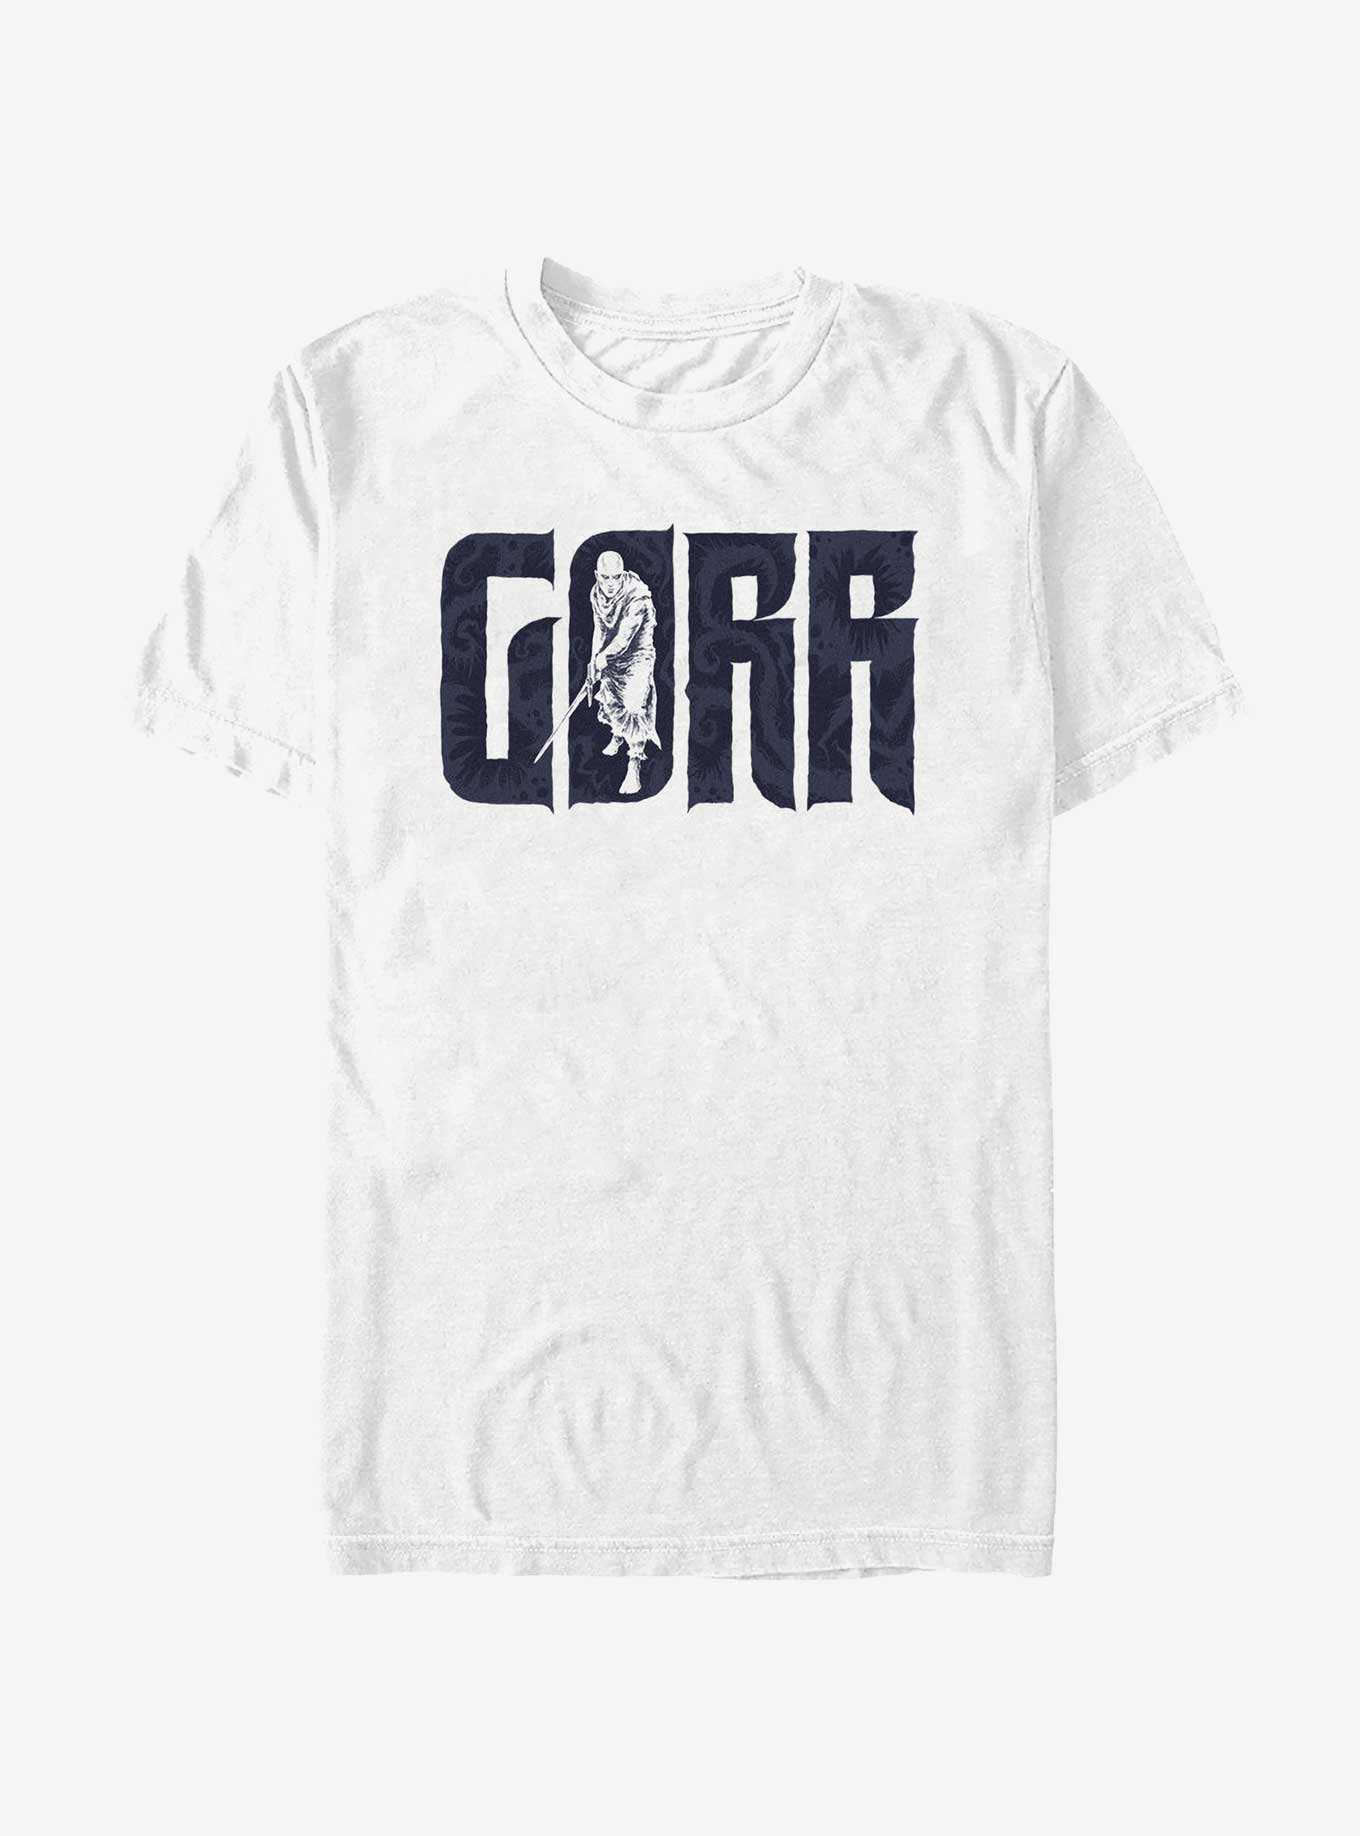 Marvel Thor Gorr T-Shirt, , hi-res